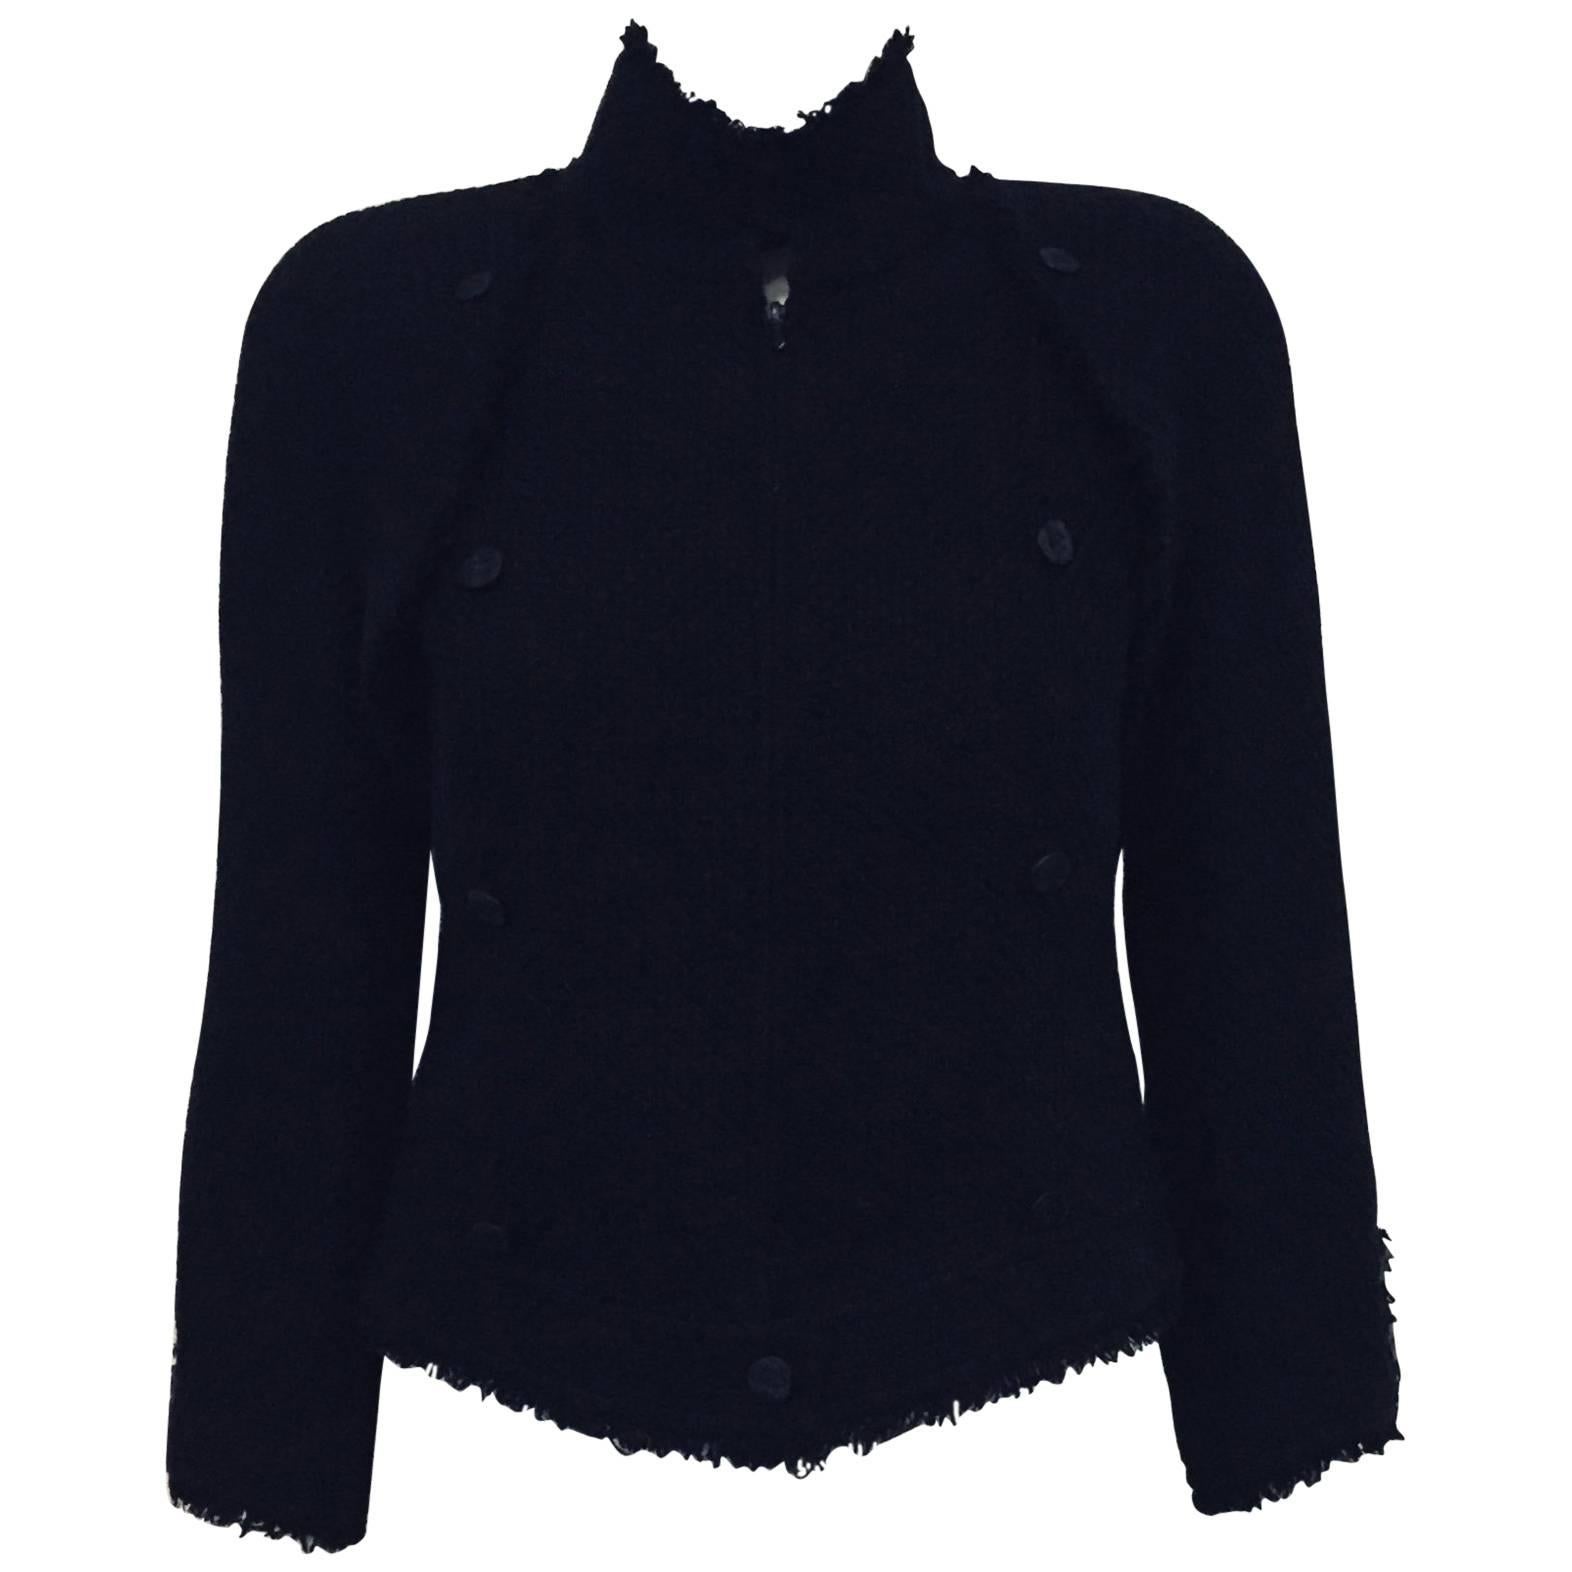  Chanel Black Tweed Vest/Jacket with Removable Bolero Jacket 